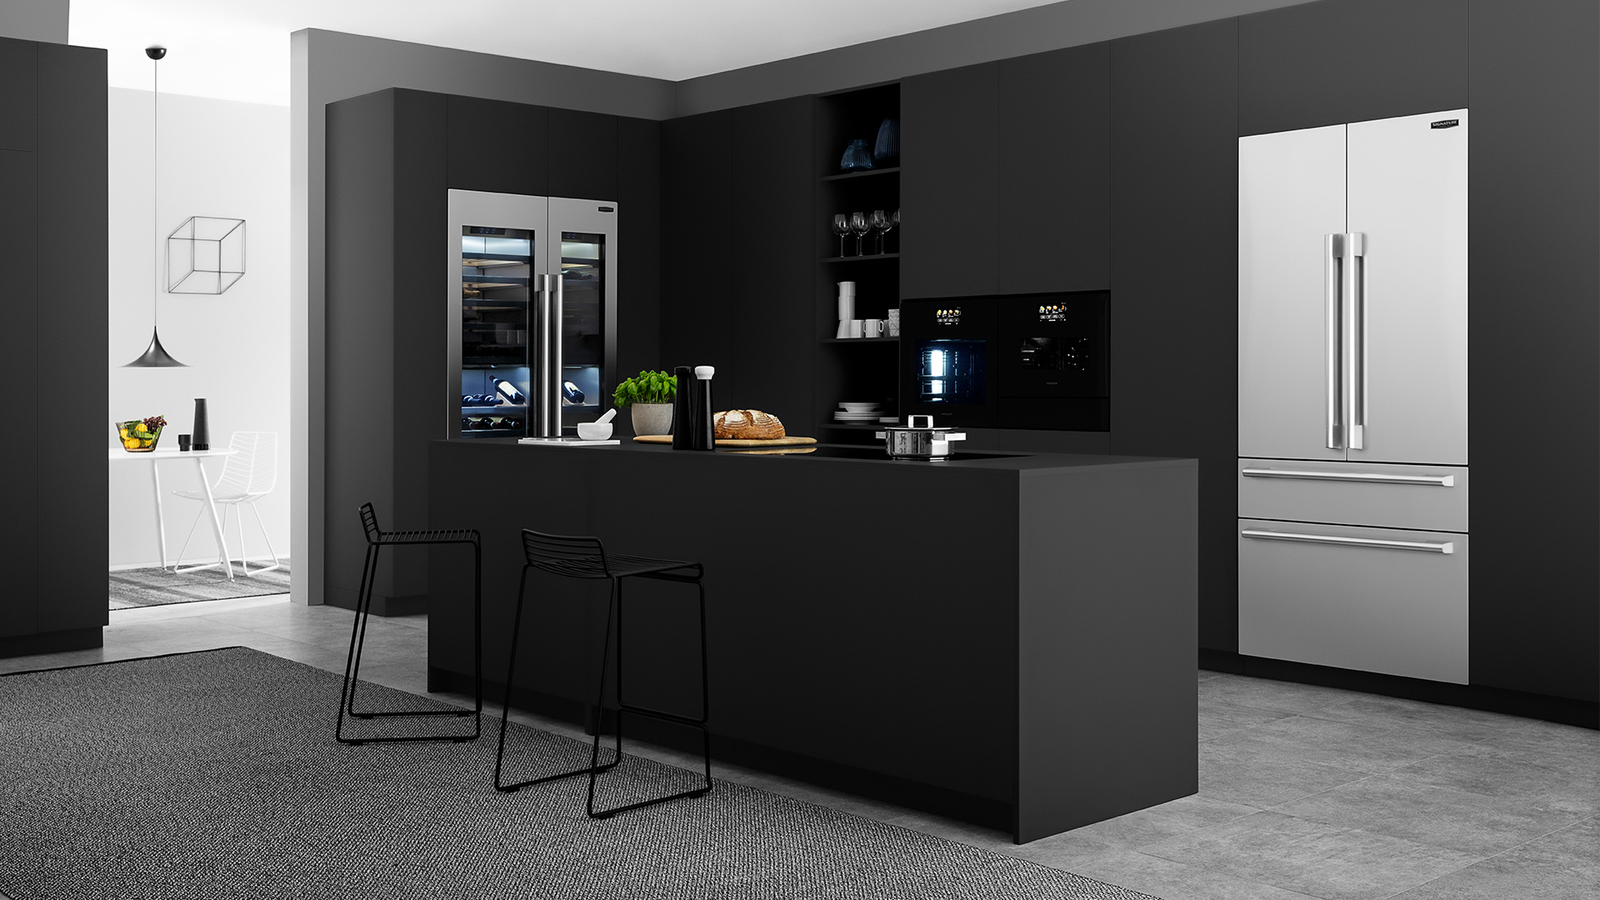 signature-kitchen-suite-top-design-brand-italy-fuorisalone-it